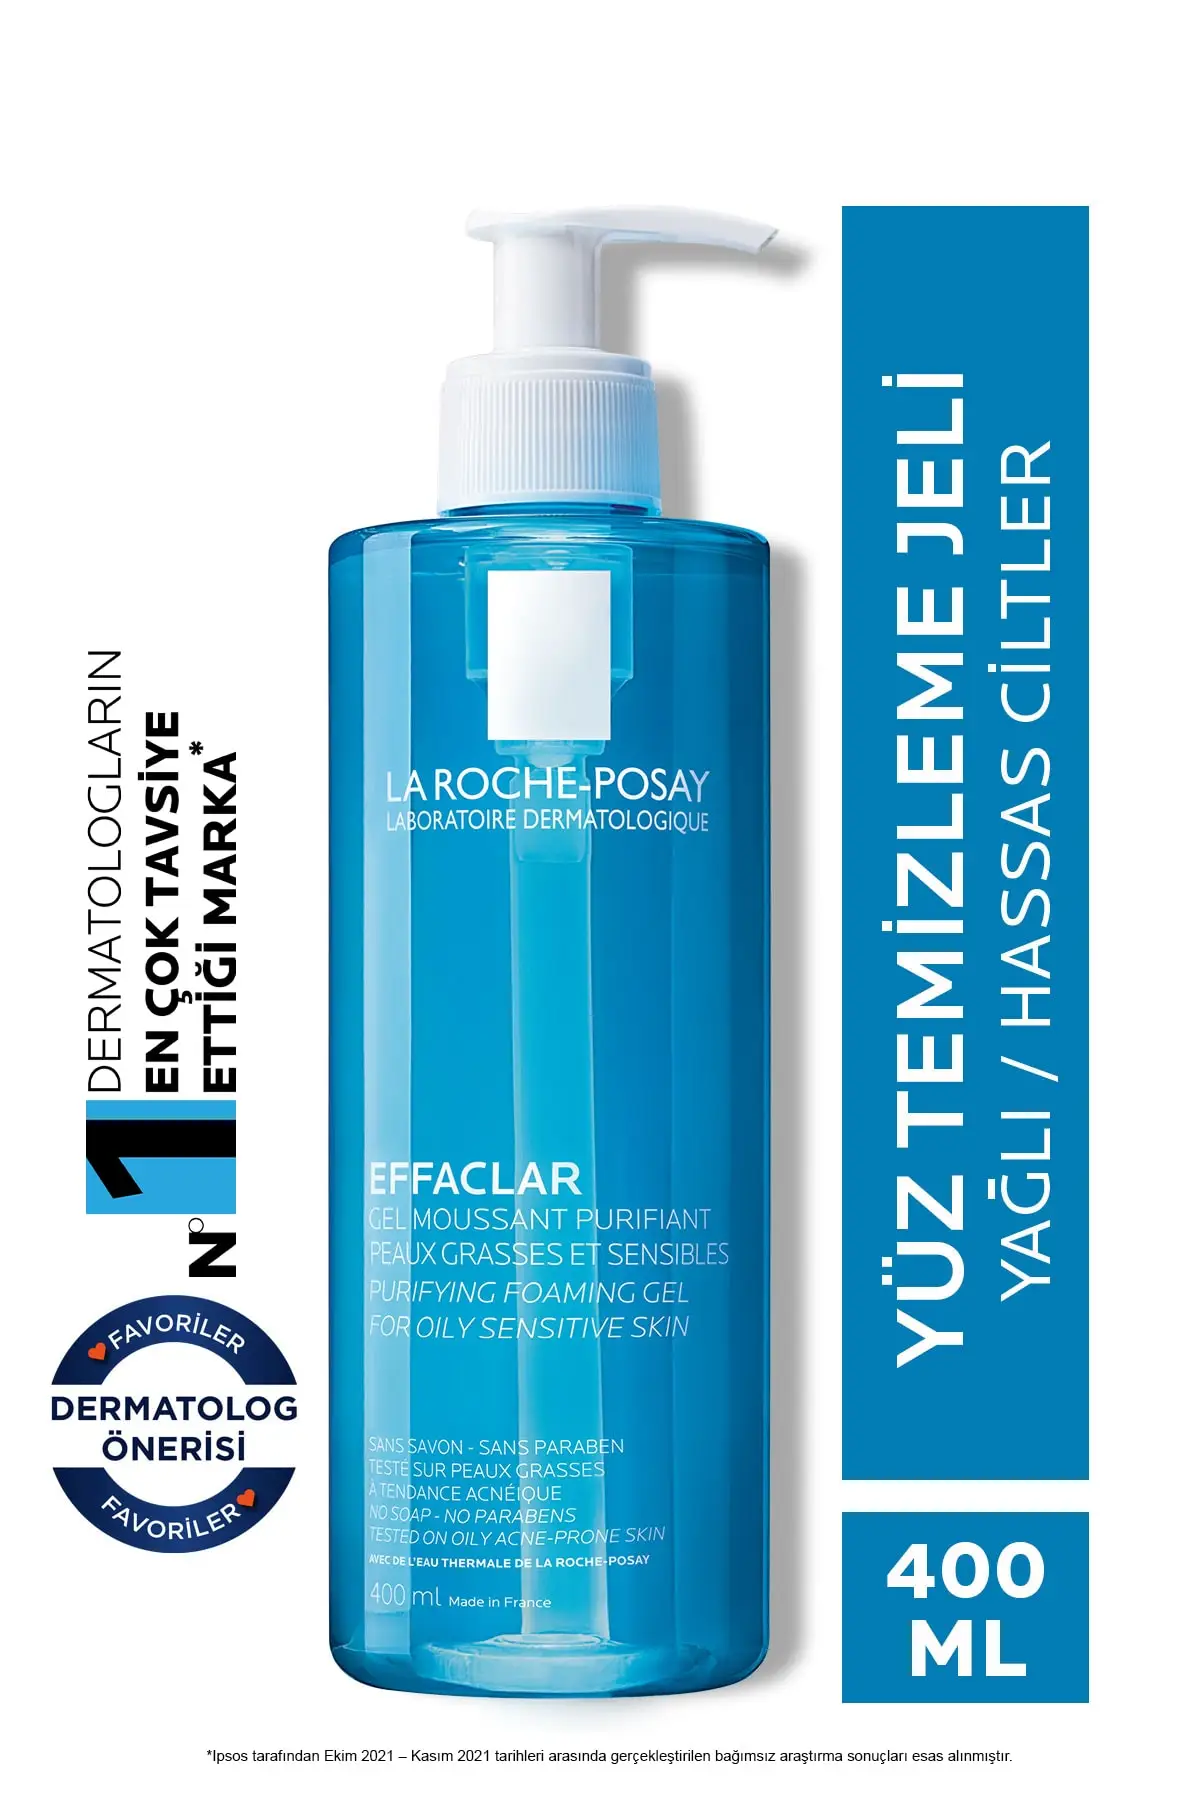 

Effaclar Cleansing Gel 400 ml - Oily and Acne Prone Skin